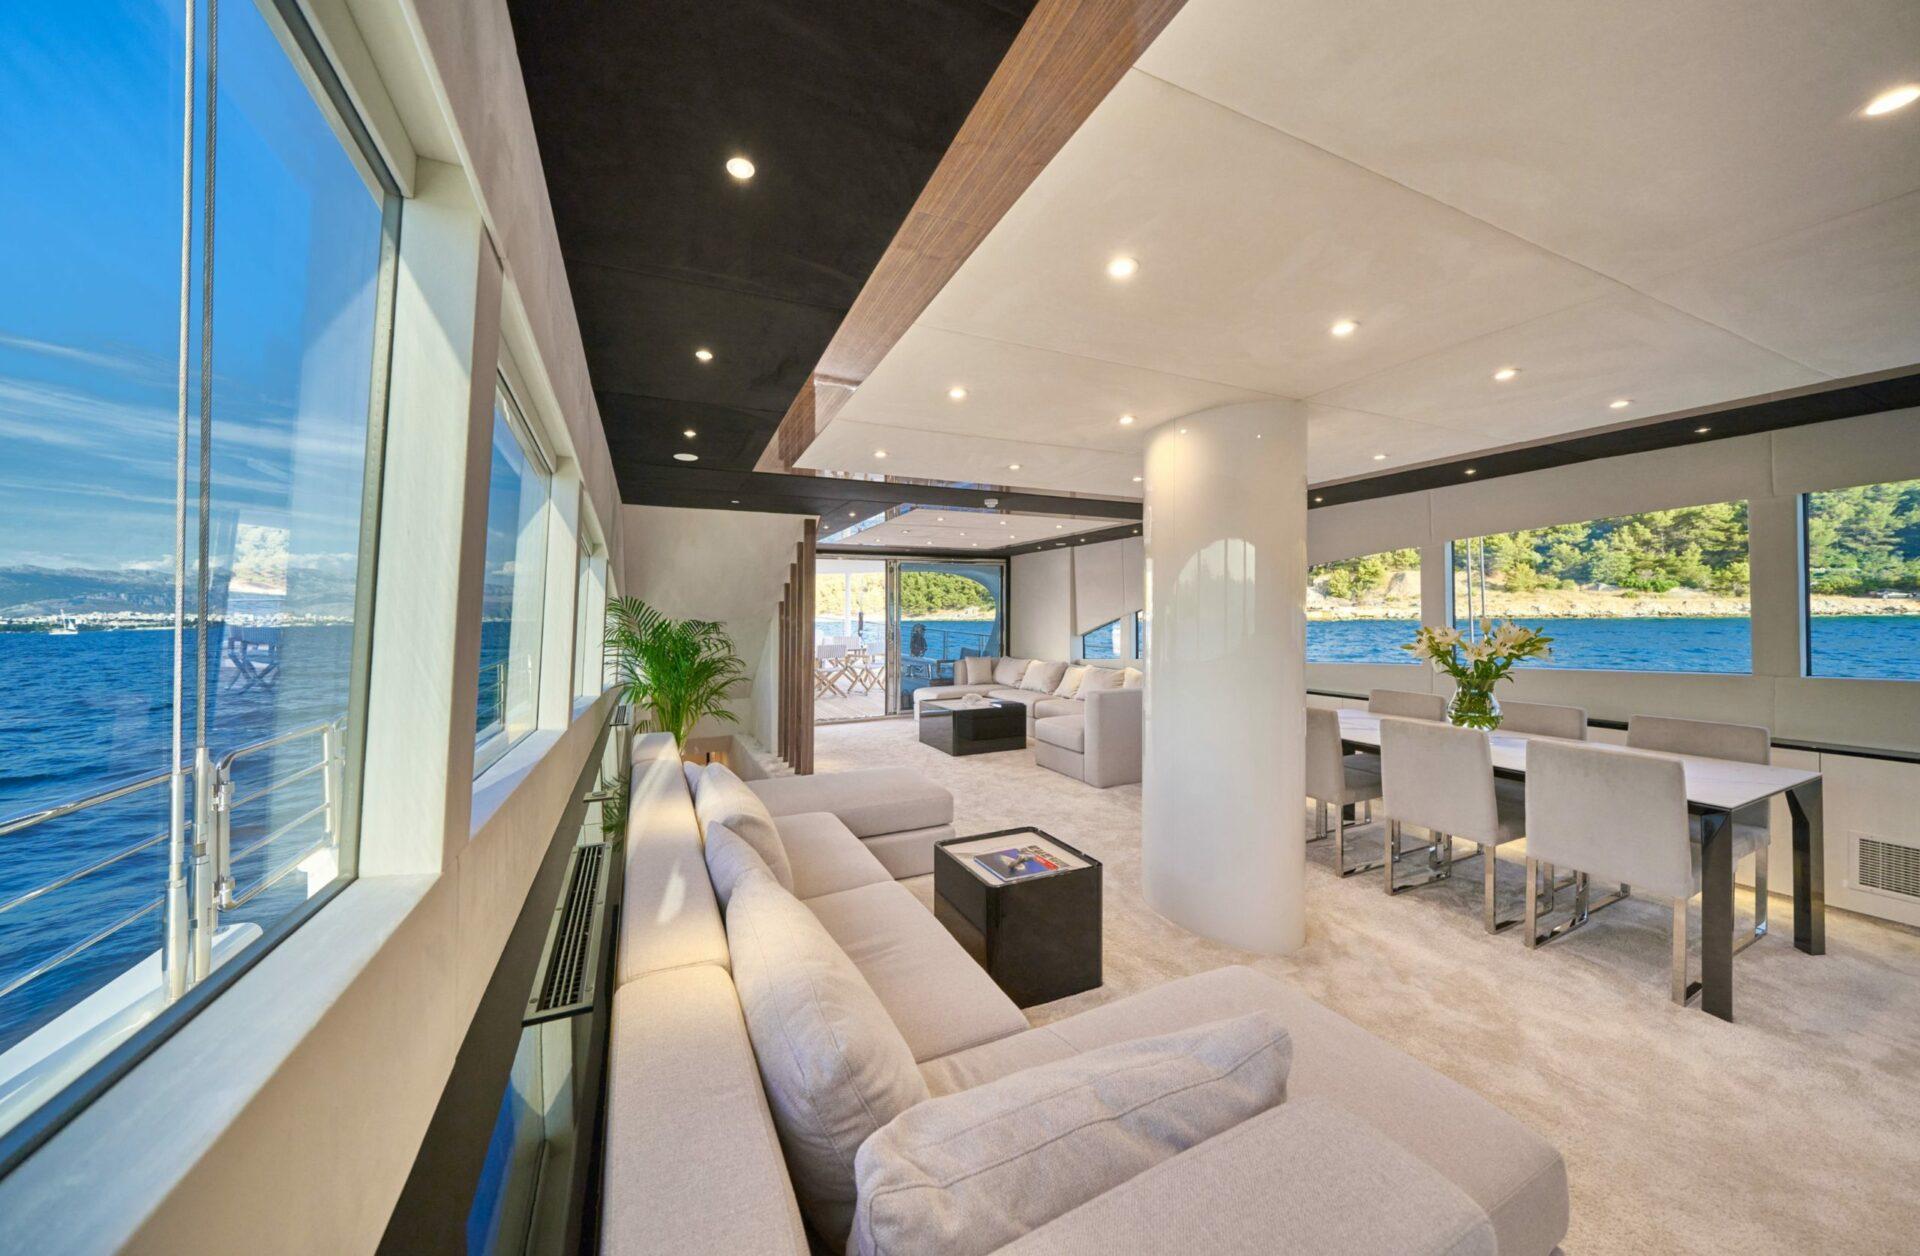 Luxury Yacht Acapella interior